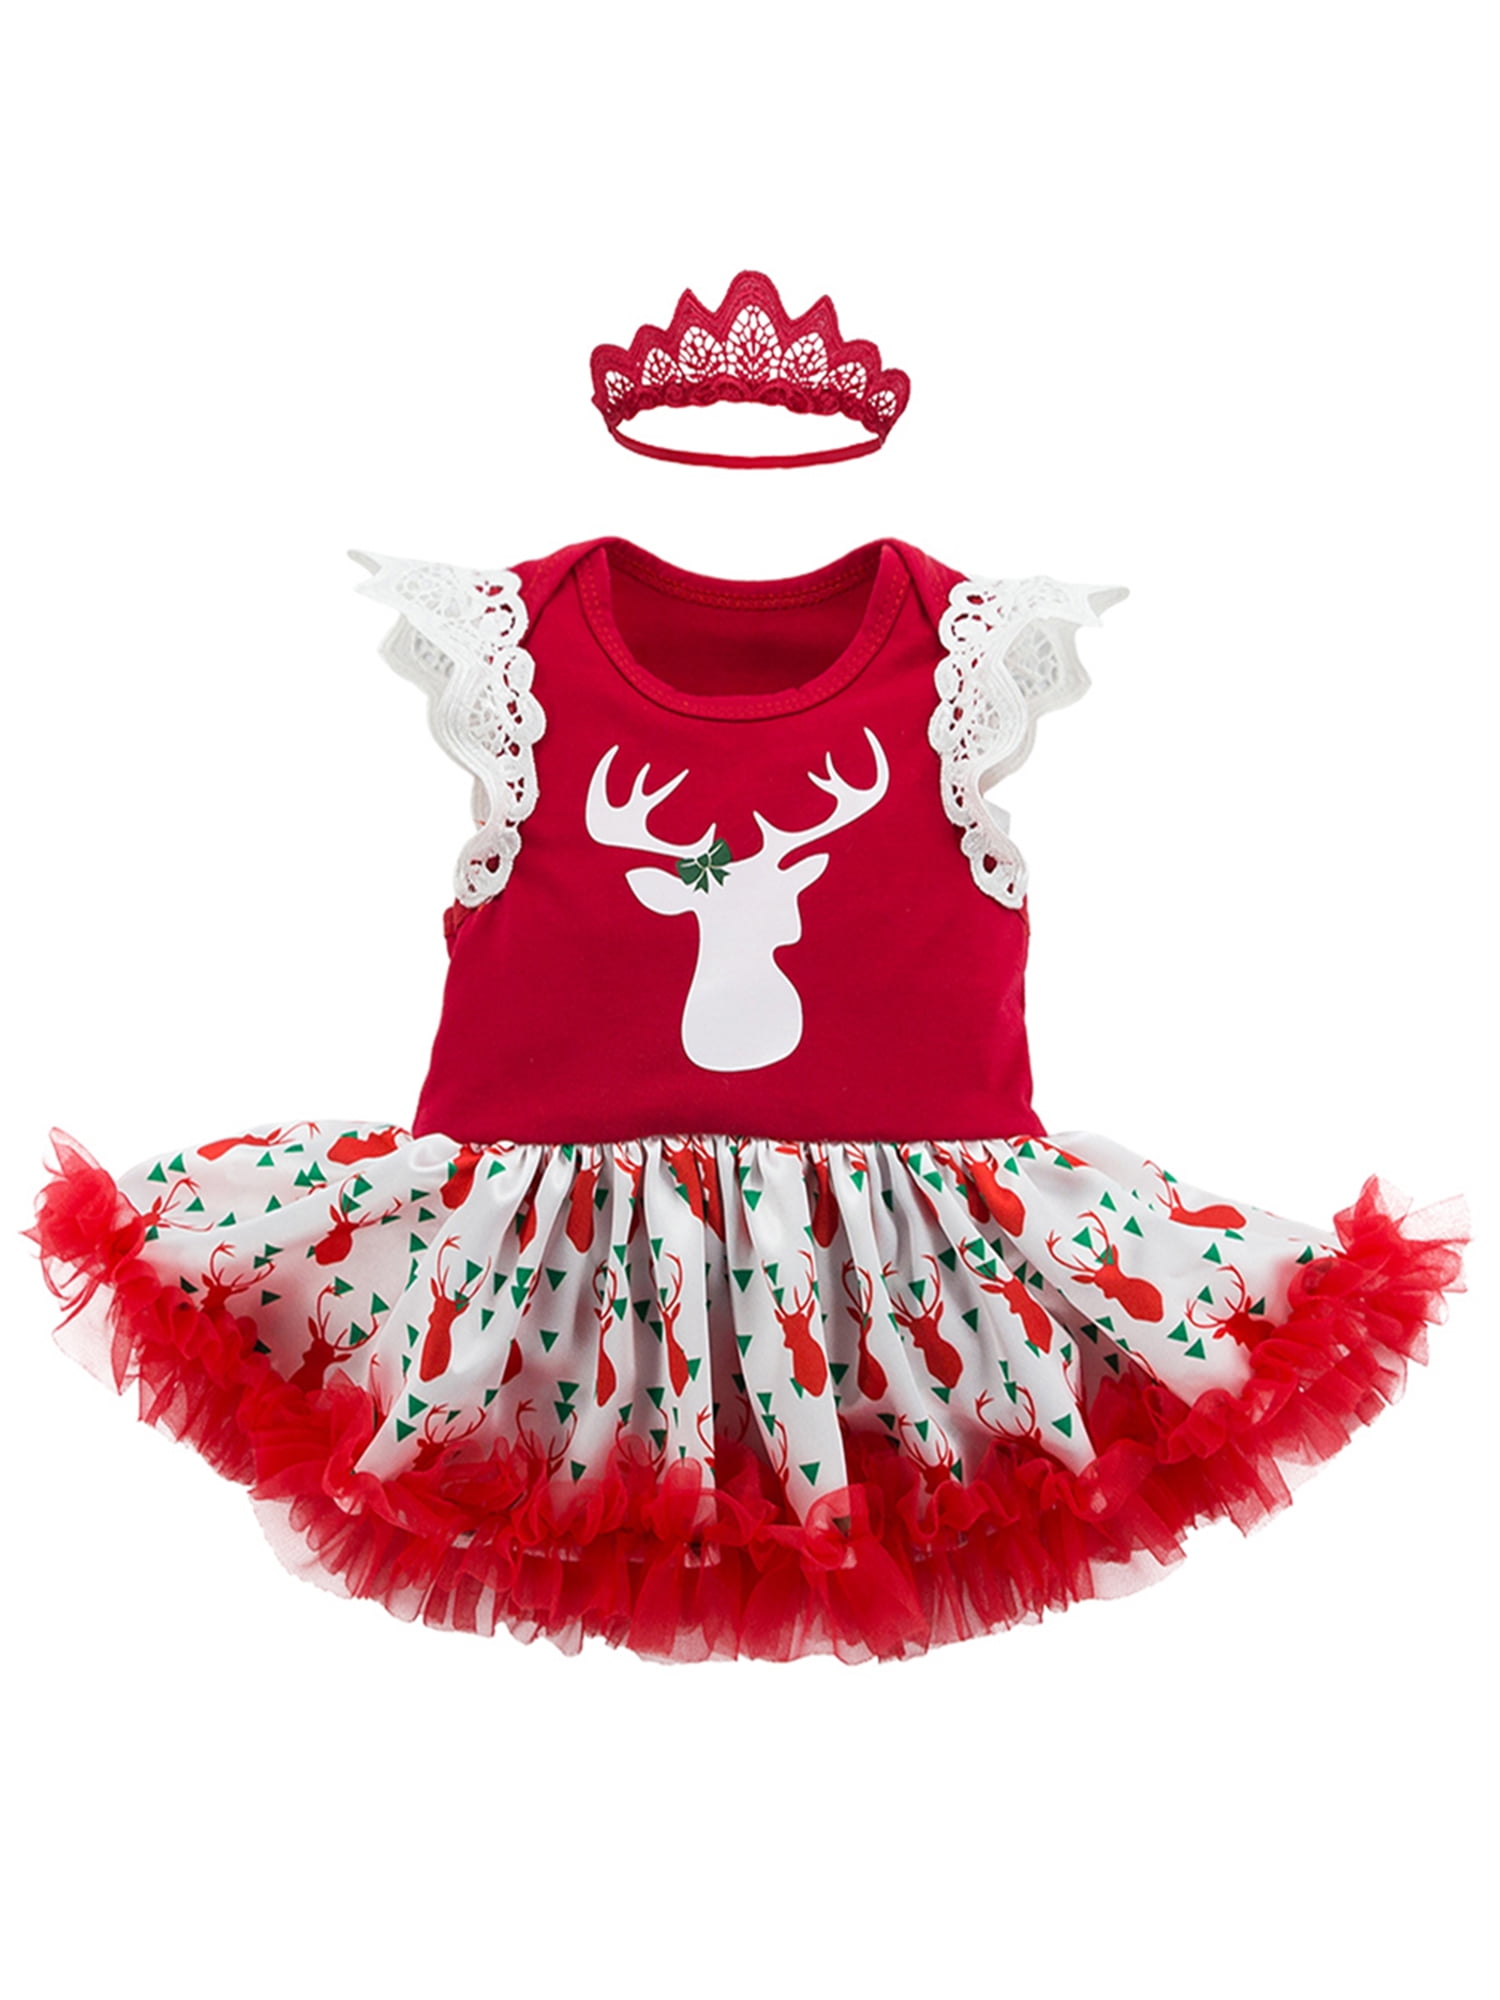 Bonnie Baby Size 24M tutu Baby Toddler 2 Piece Dress Set NEW Holiday Christmas 